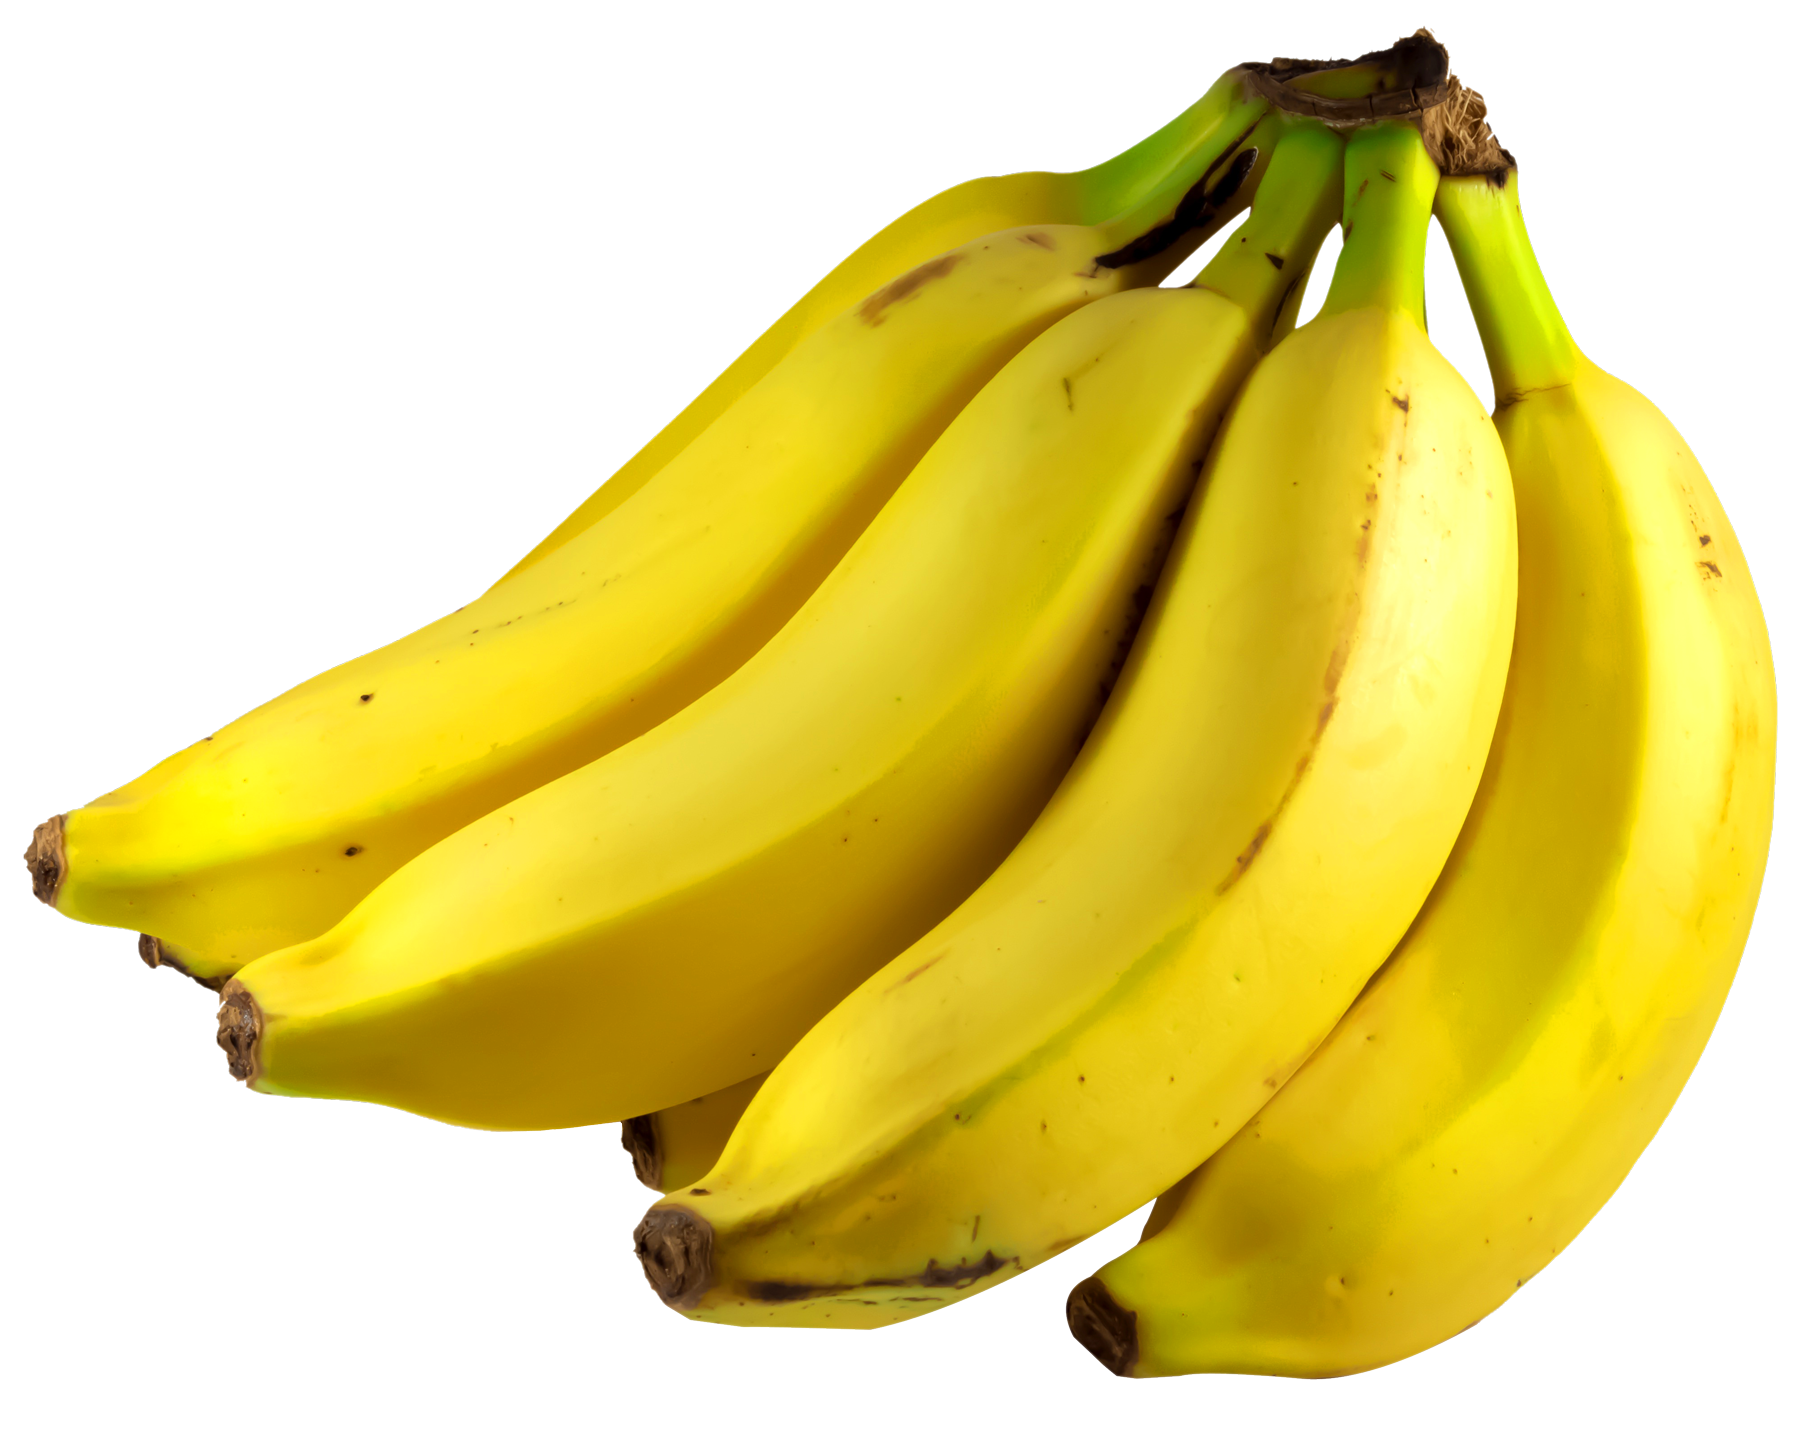 Bunch of Bananas PNG image - PngPix